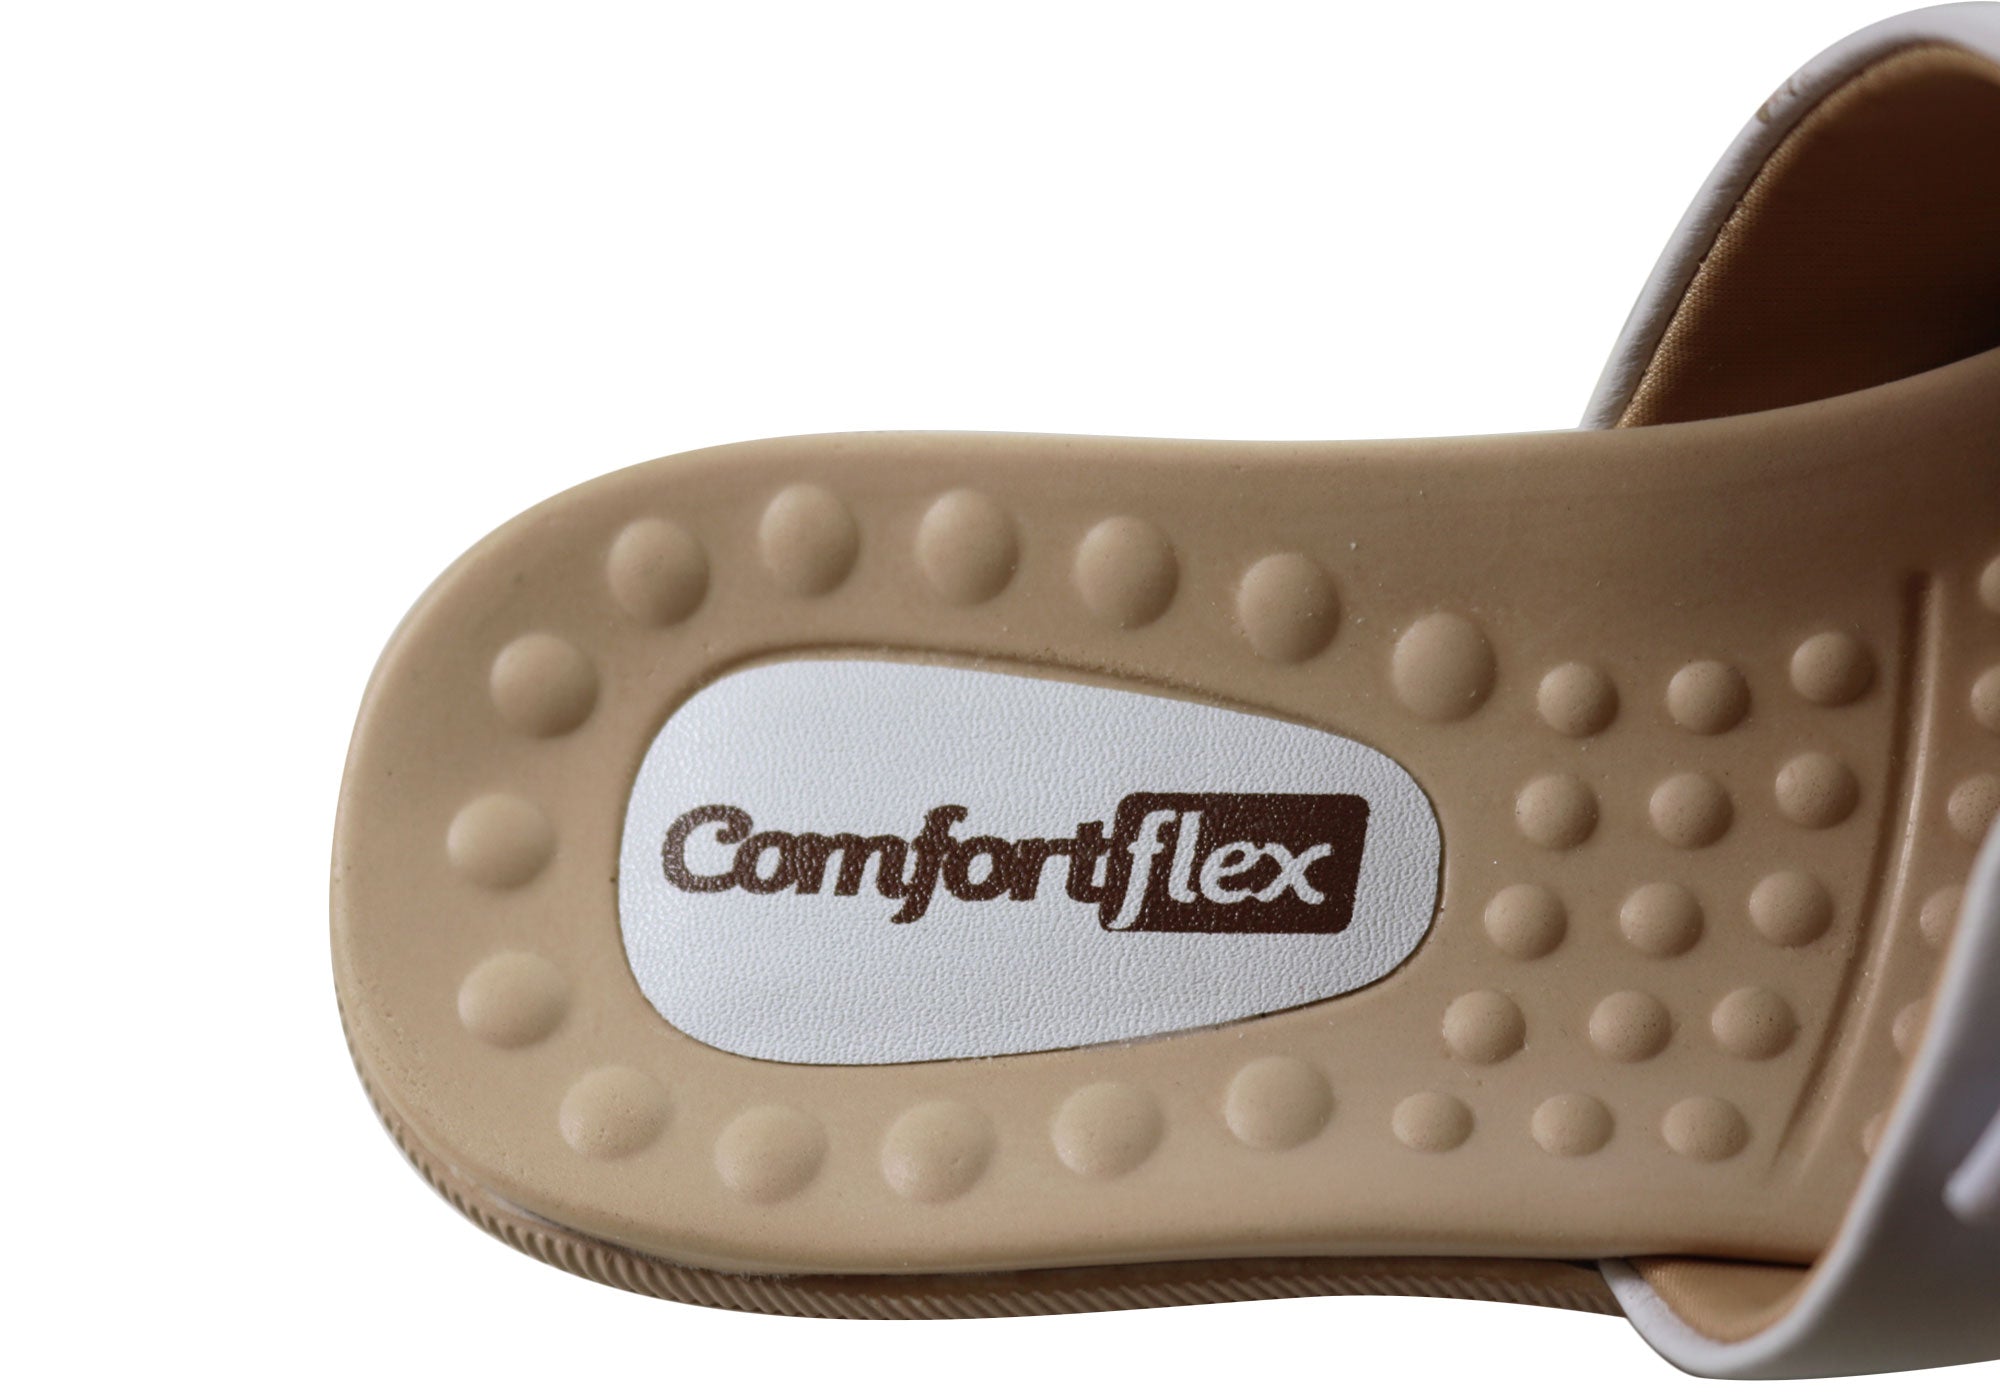 Comfortflex Daphine Womens Leather Slides Sandals Made In Brazil